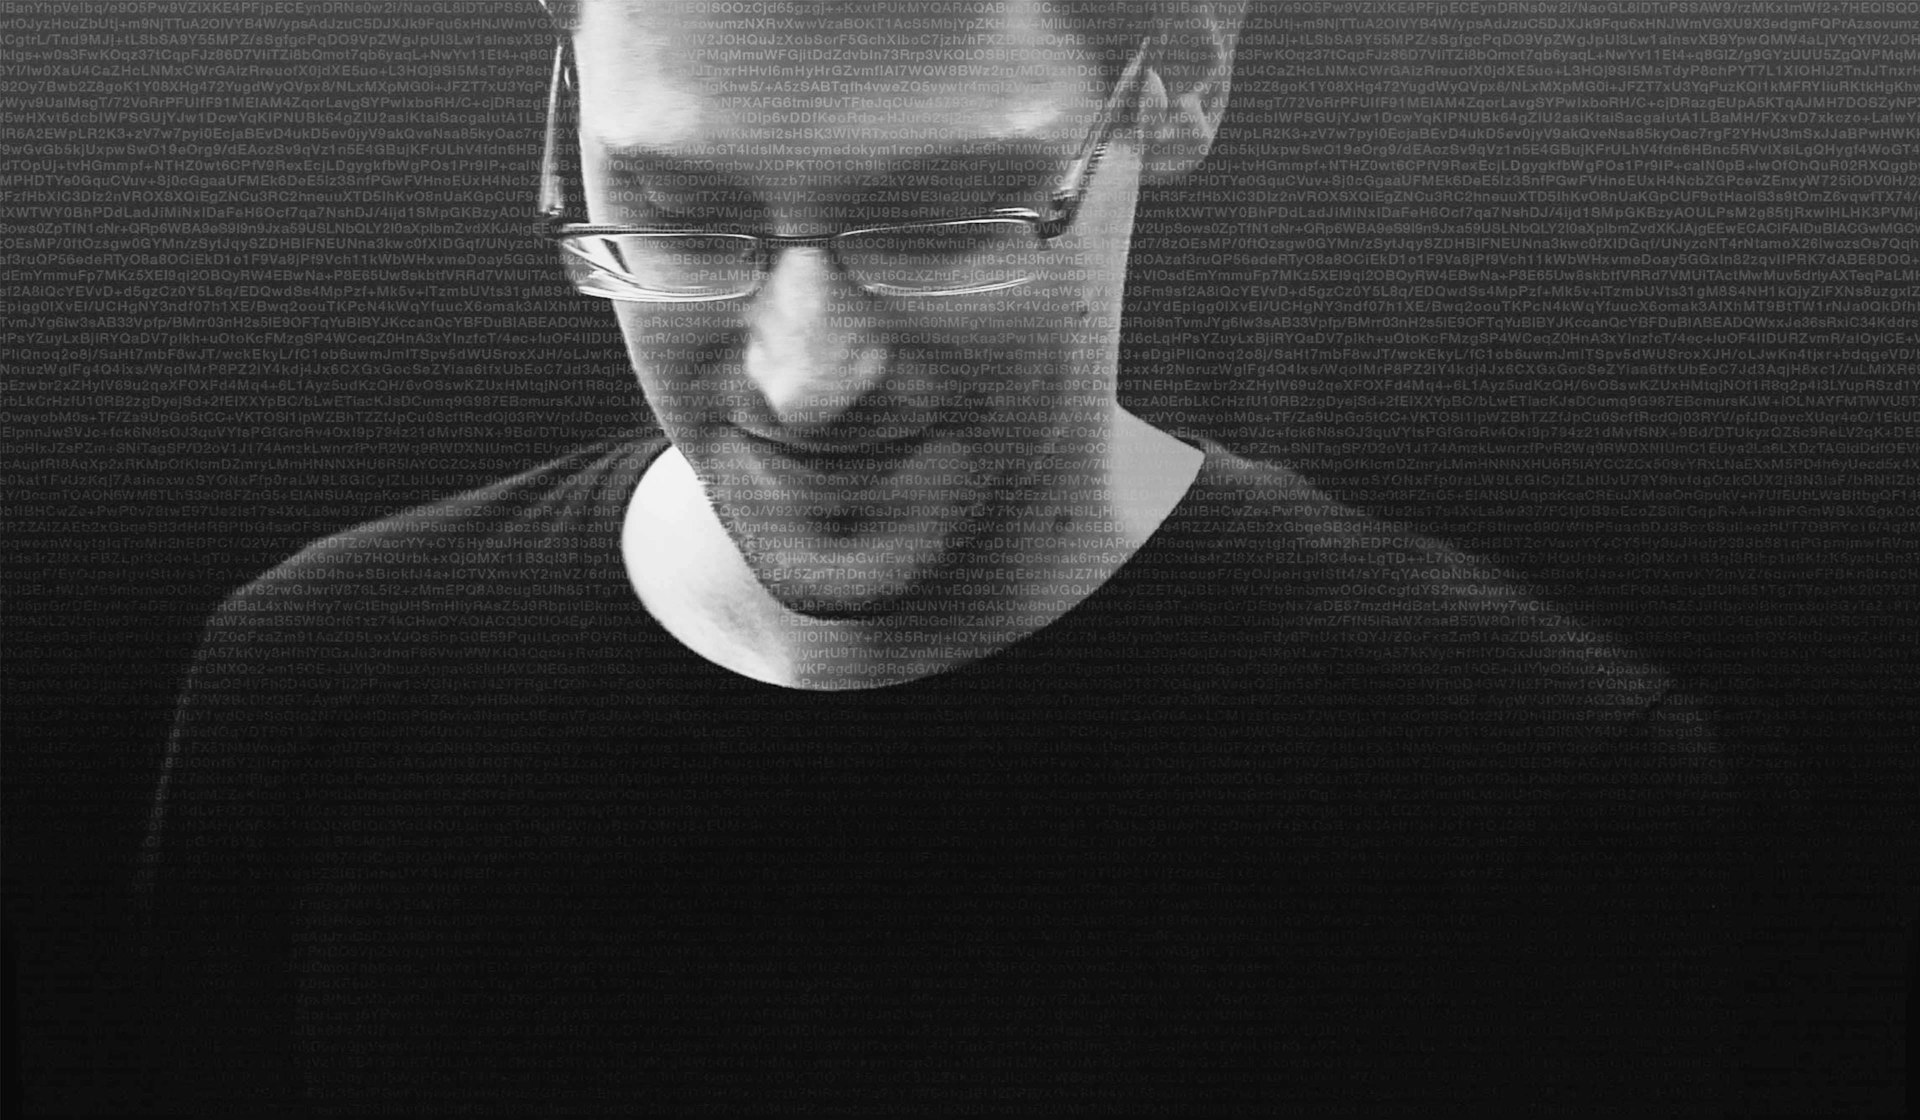 The Oscar-winning inside story of Edward Snowden’s NSA spying revelations